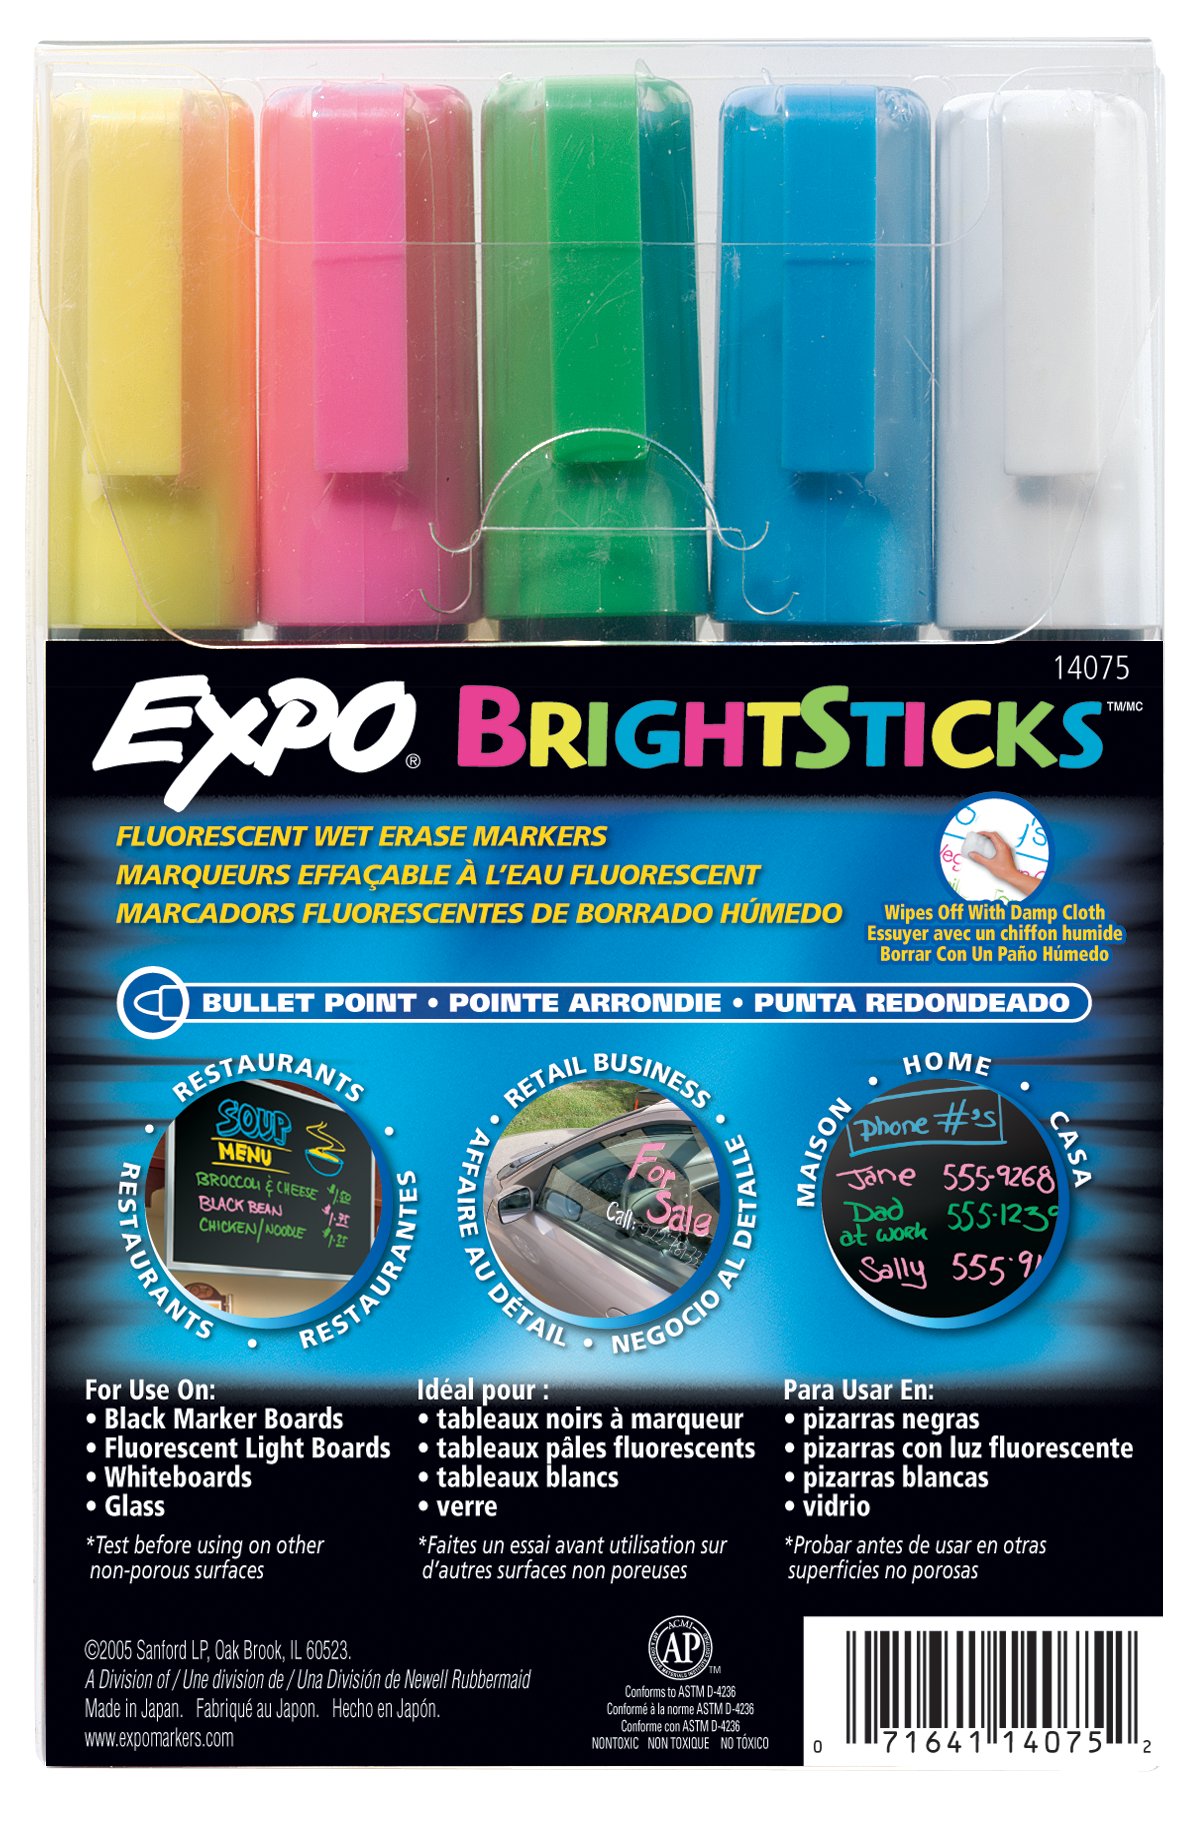 Expo Neon Blue Dry Erase Marker, Bullet Tip